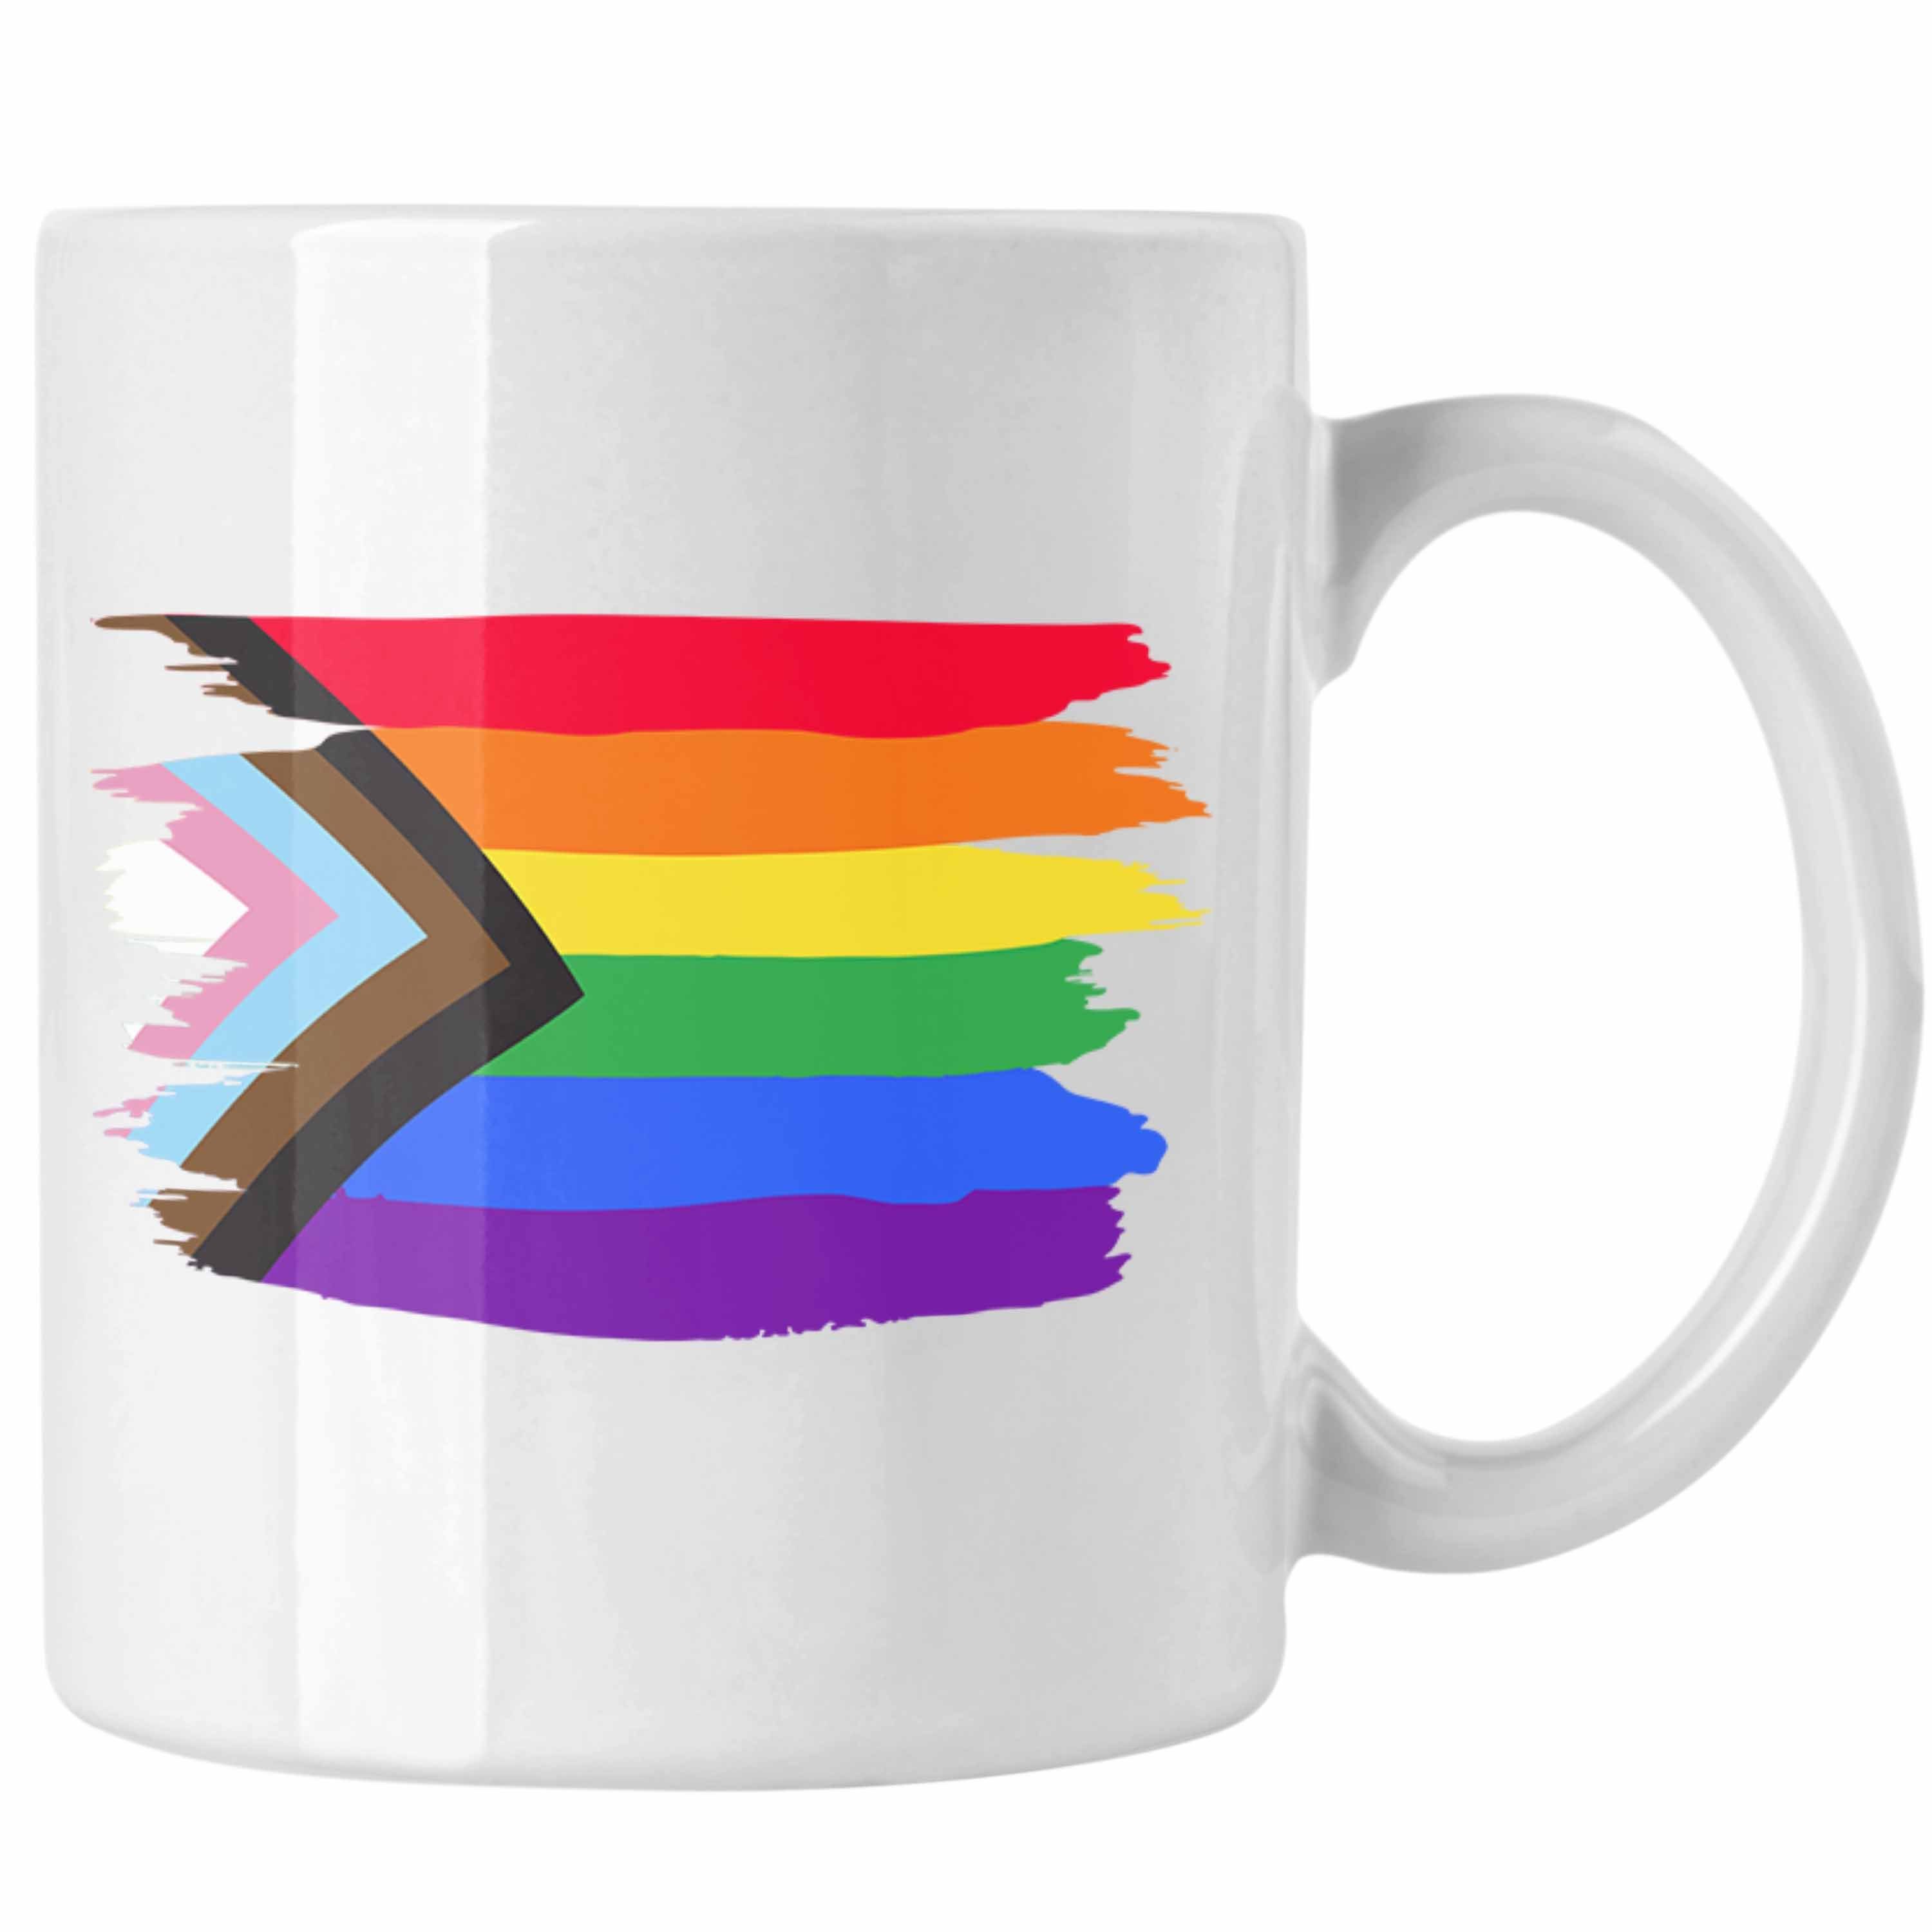 Trendation Tasse Trendation - Regenbogen Tasse Geschenk LGBT Schwule Lesben Transgender Grafik Pride Flagge Weiss